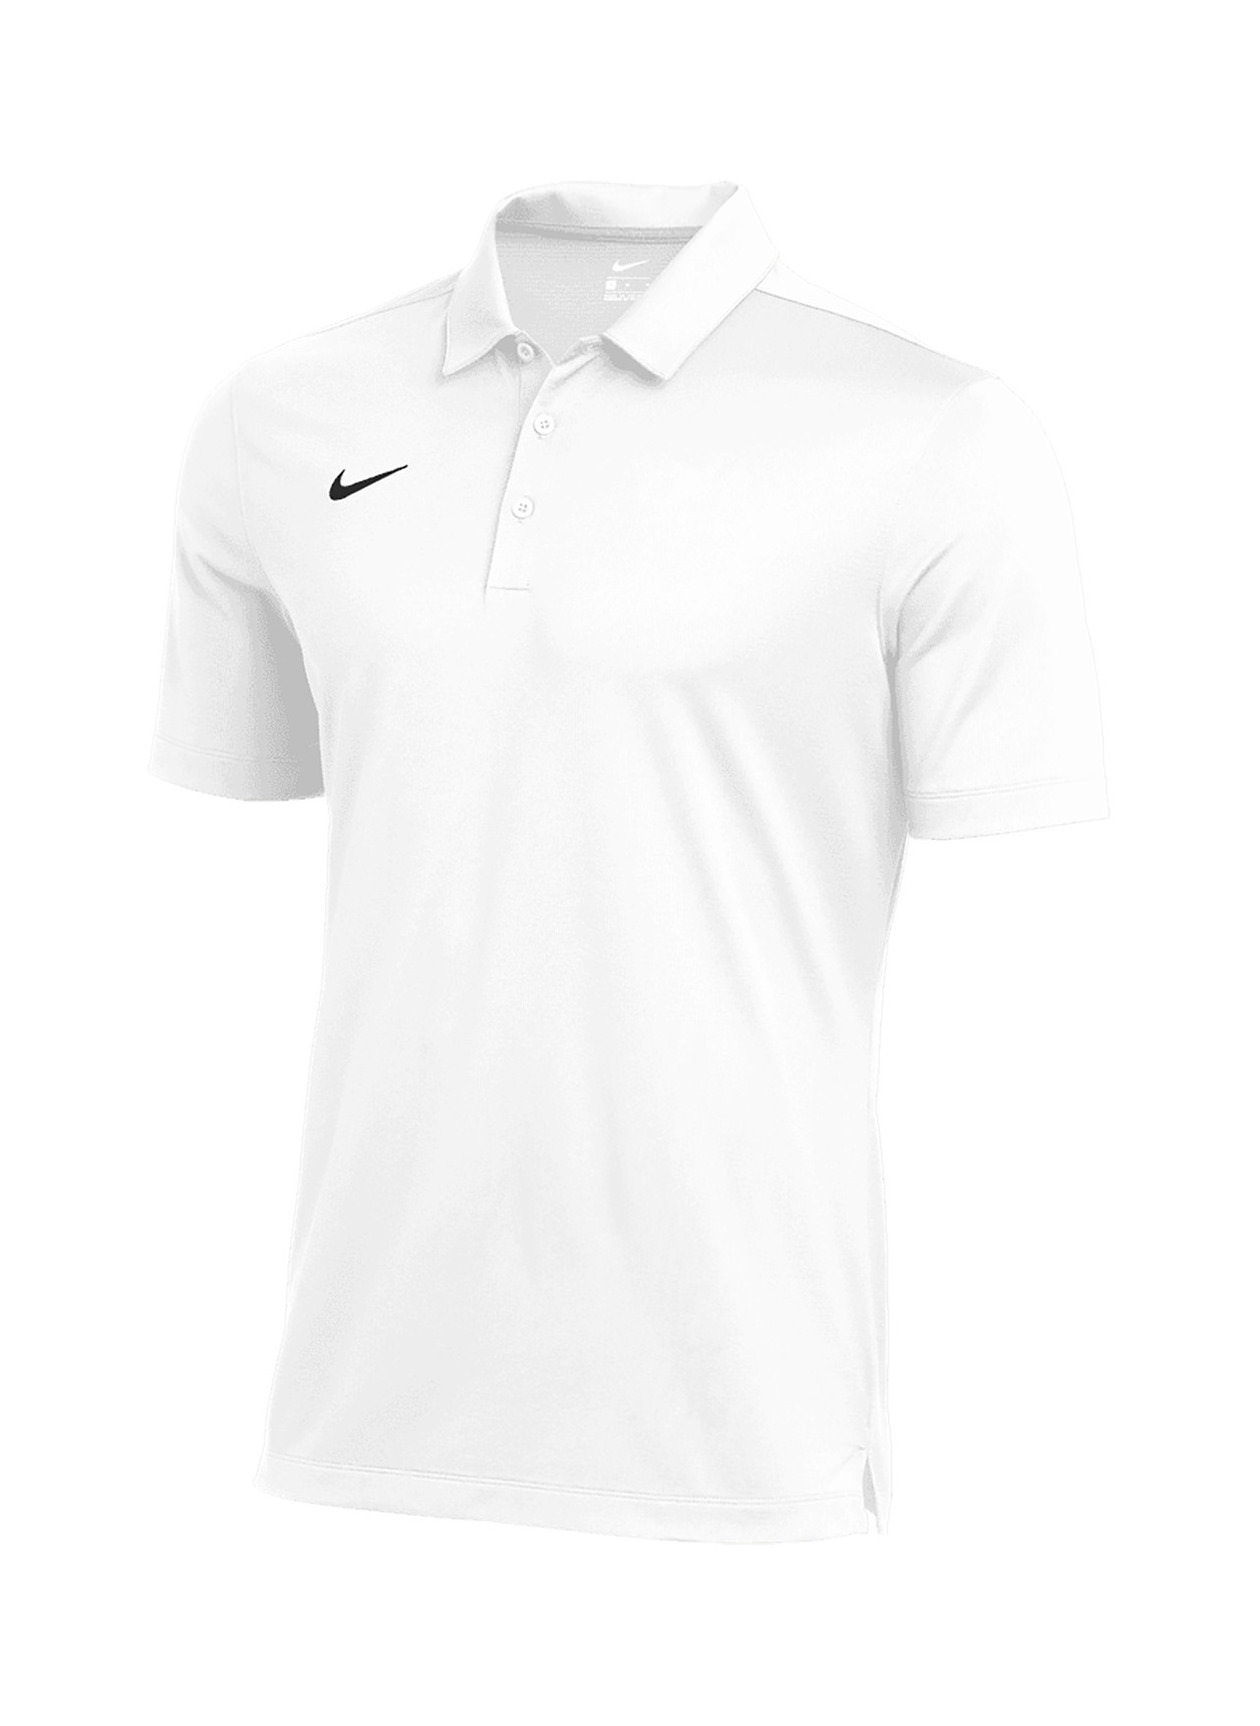 Nike Men's White Dri-FIT Franchise Polo